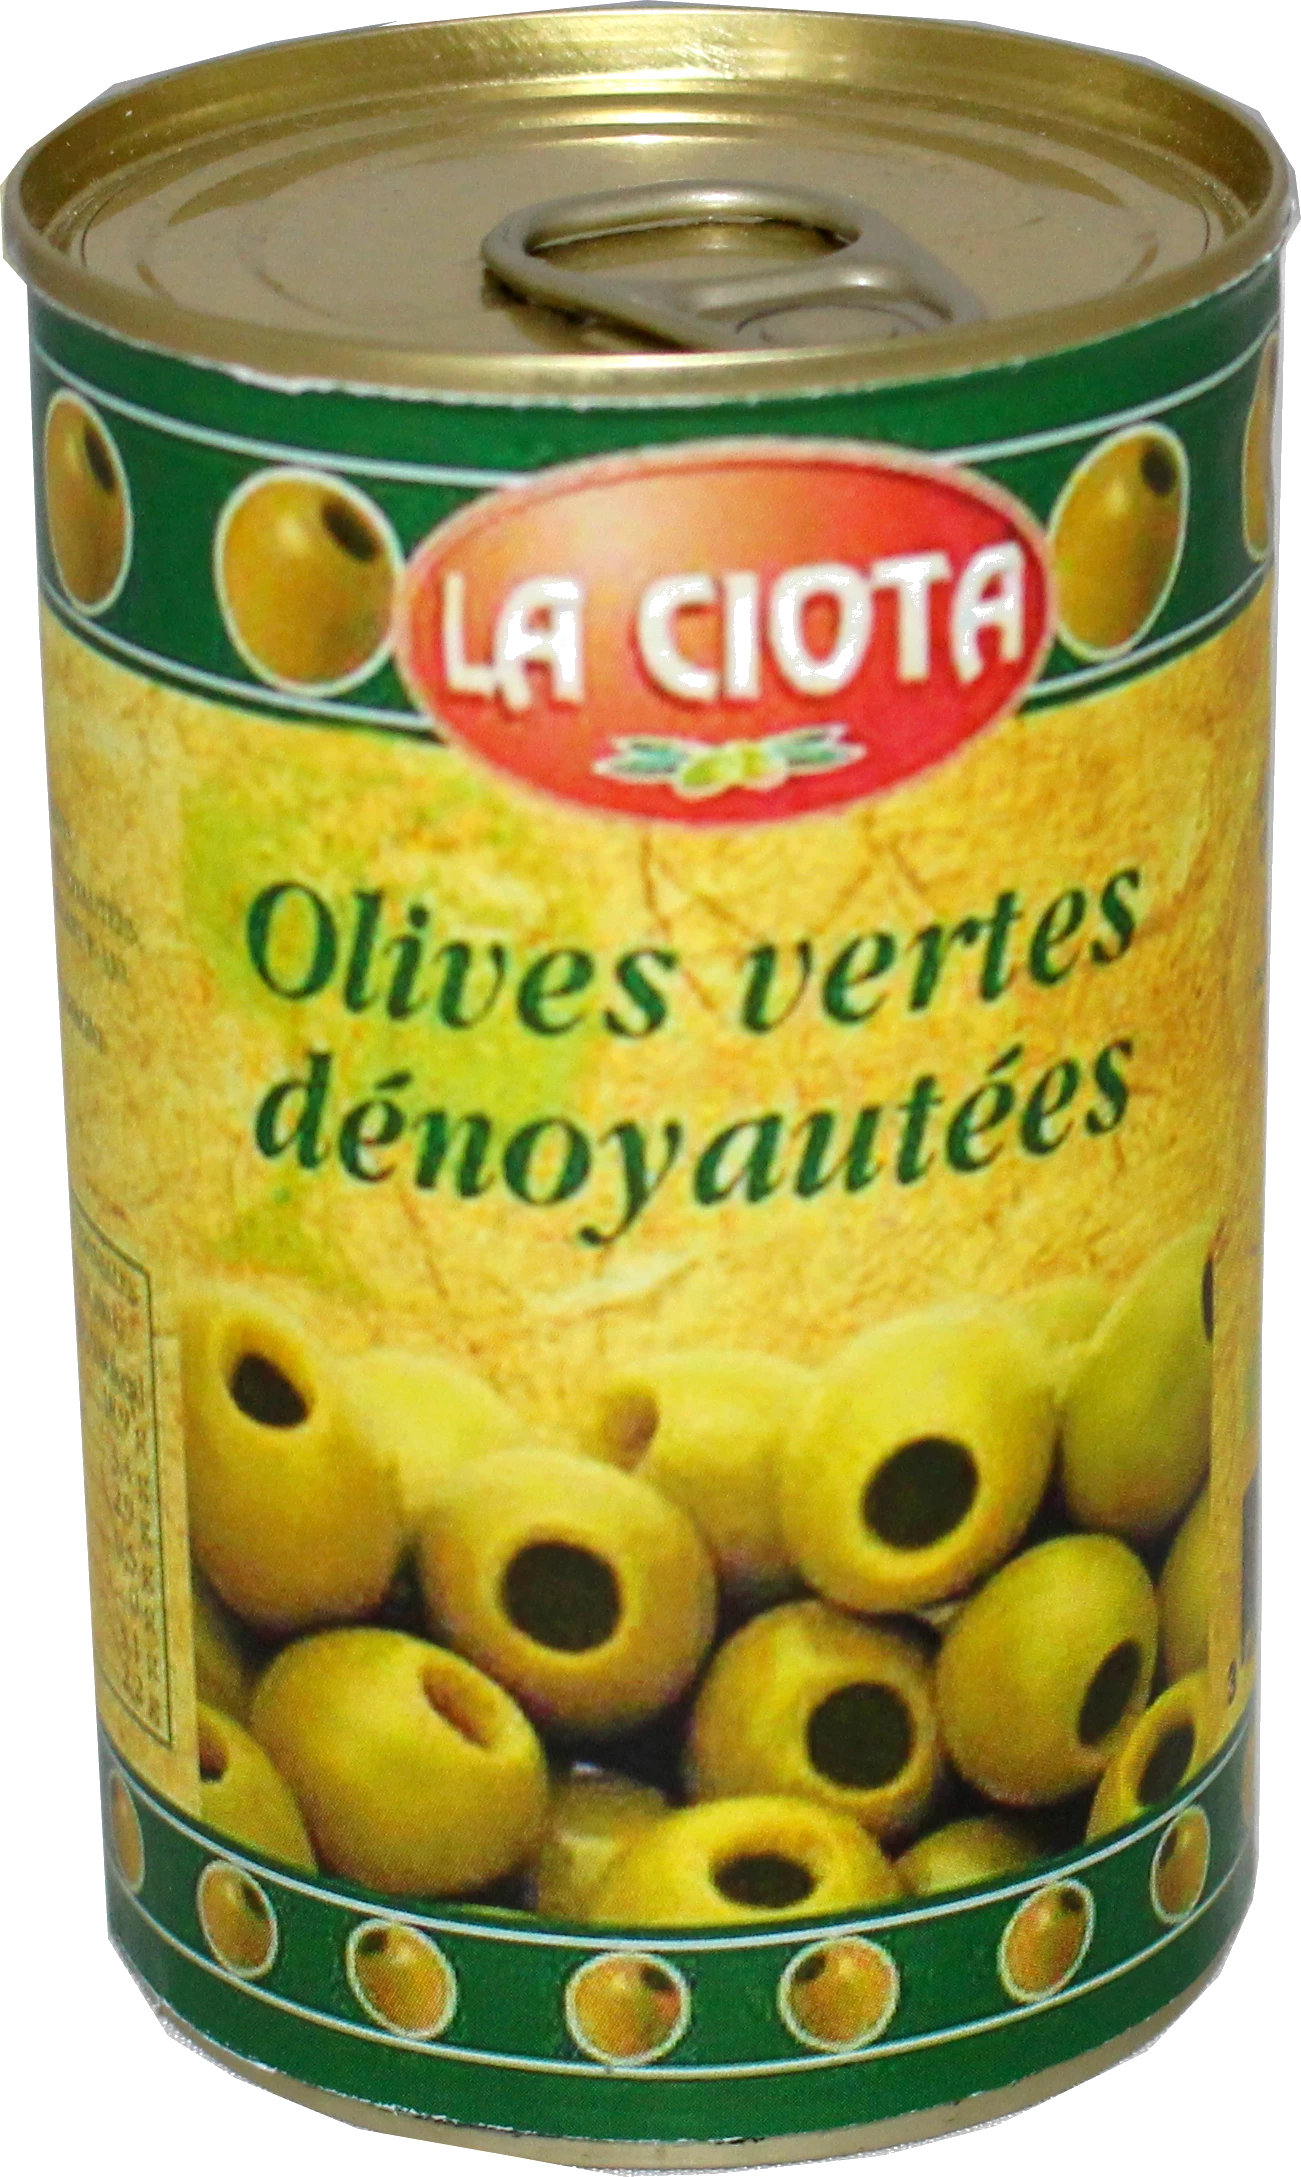 Olives Vertes denoyautées, 120g - LA CIOTA